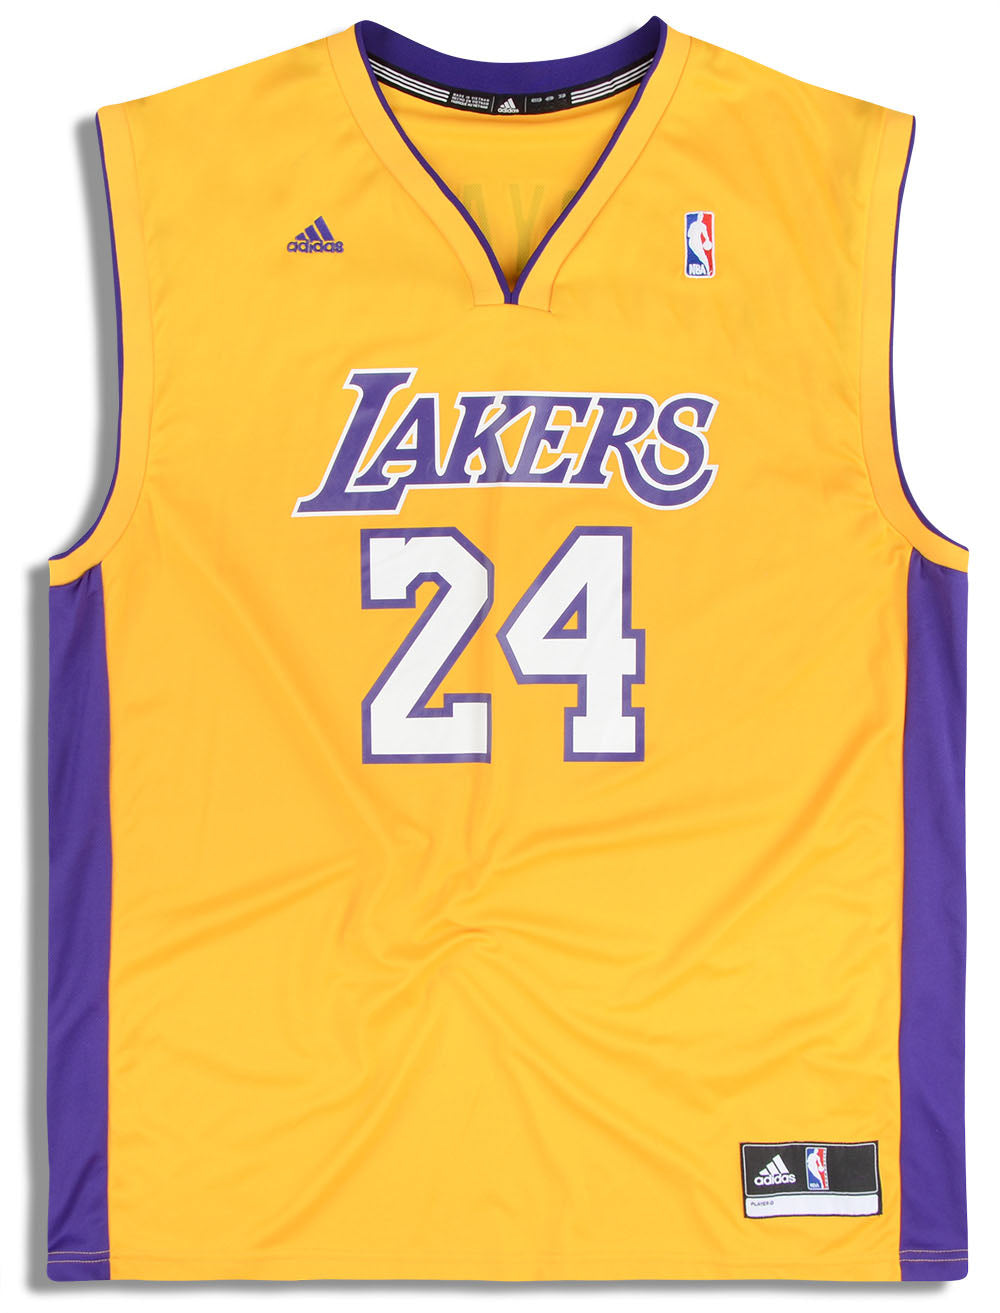 Adidas Kobe Bryant 2010 NBA Finals jersey legit check : r